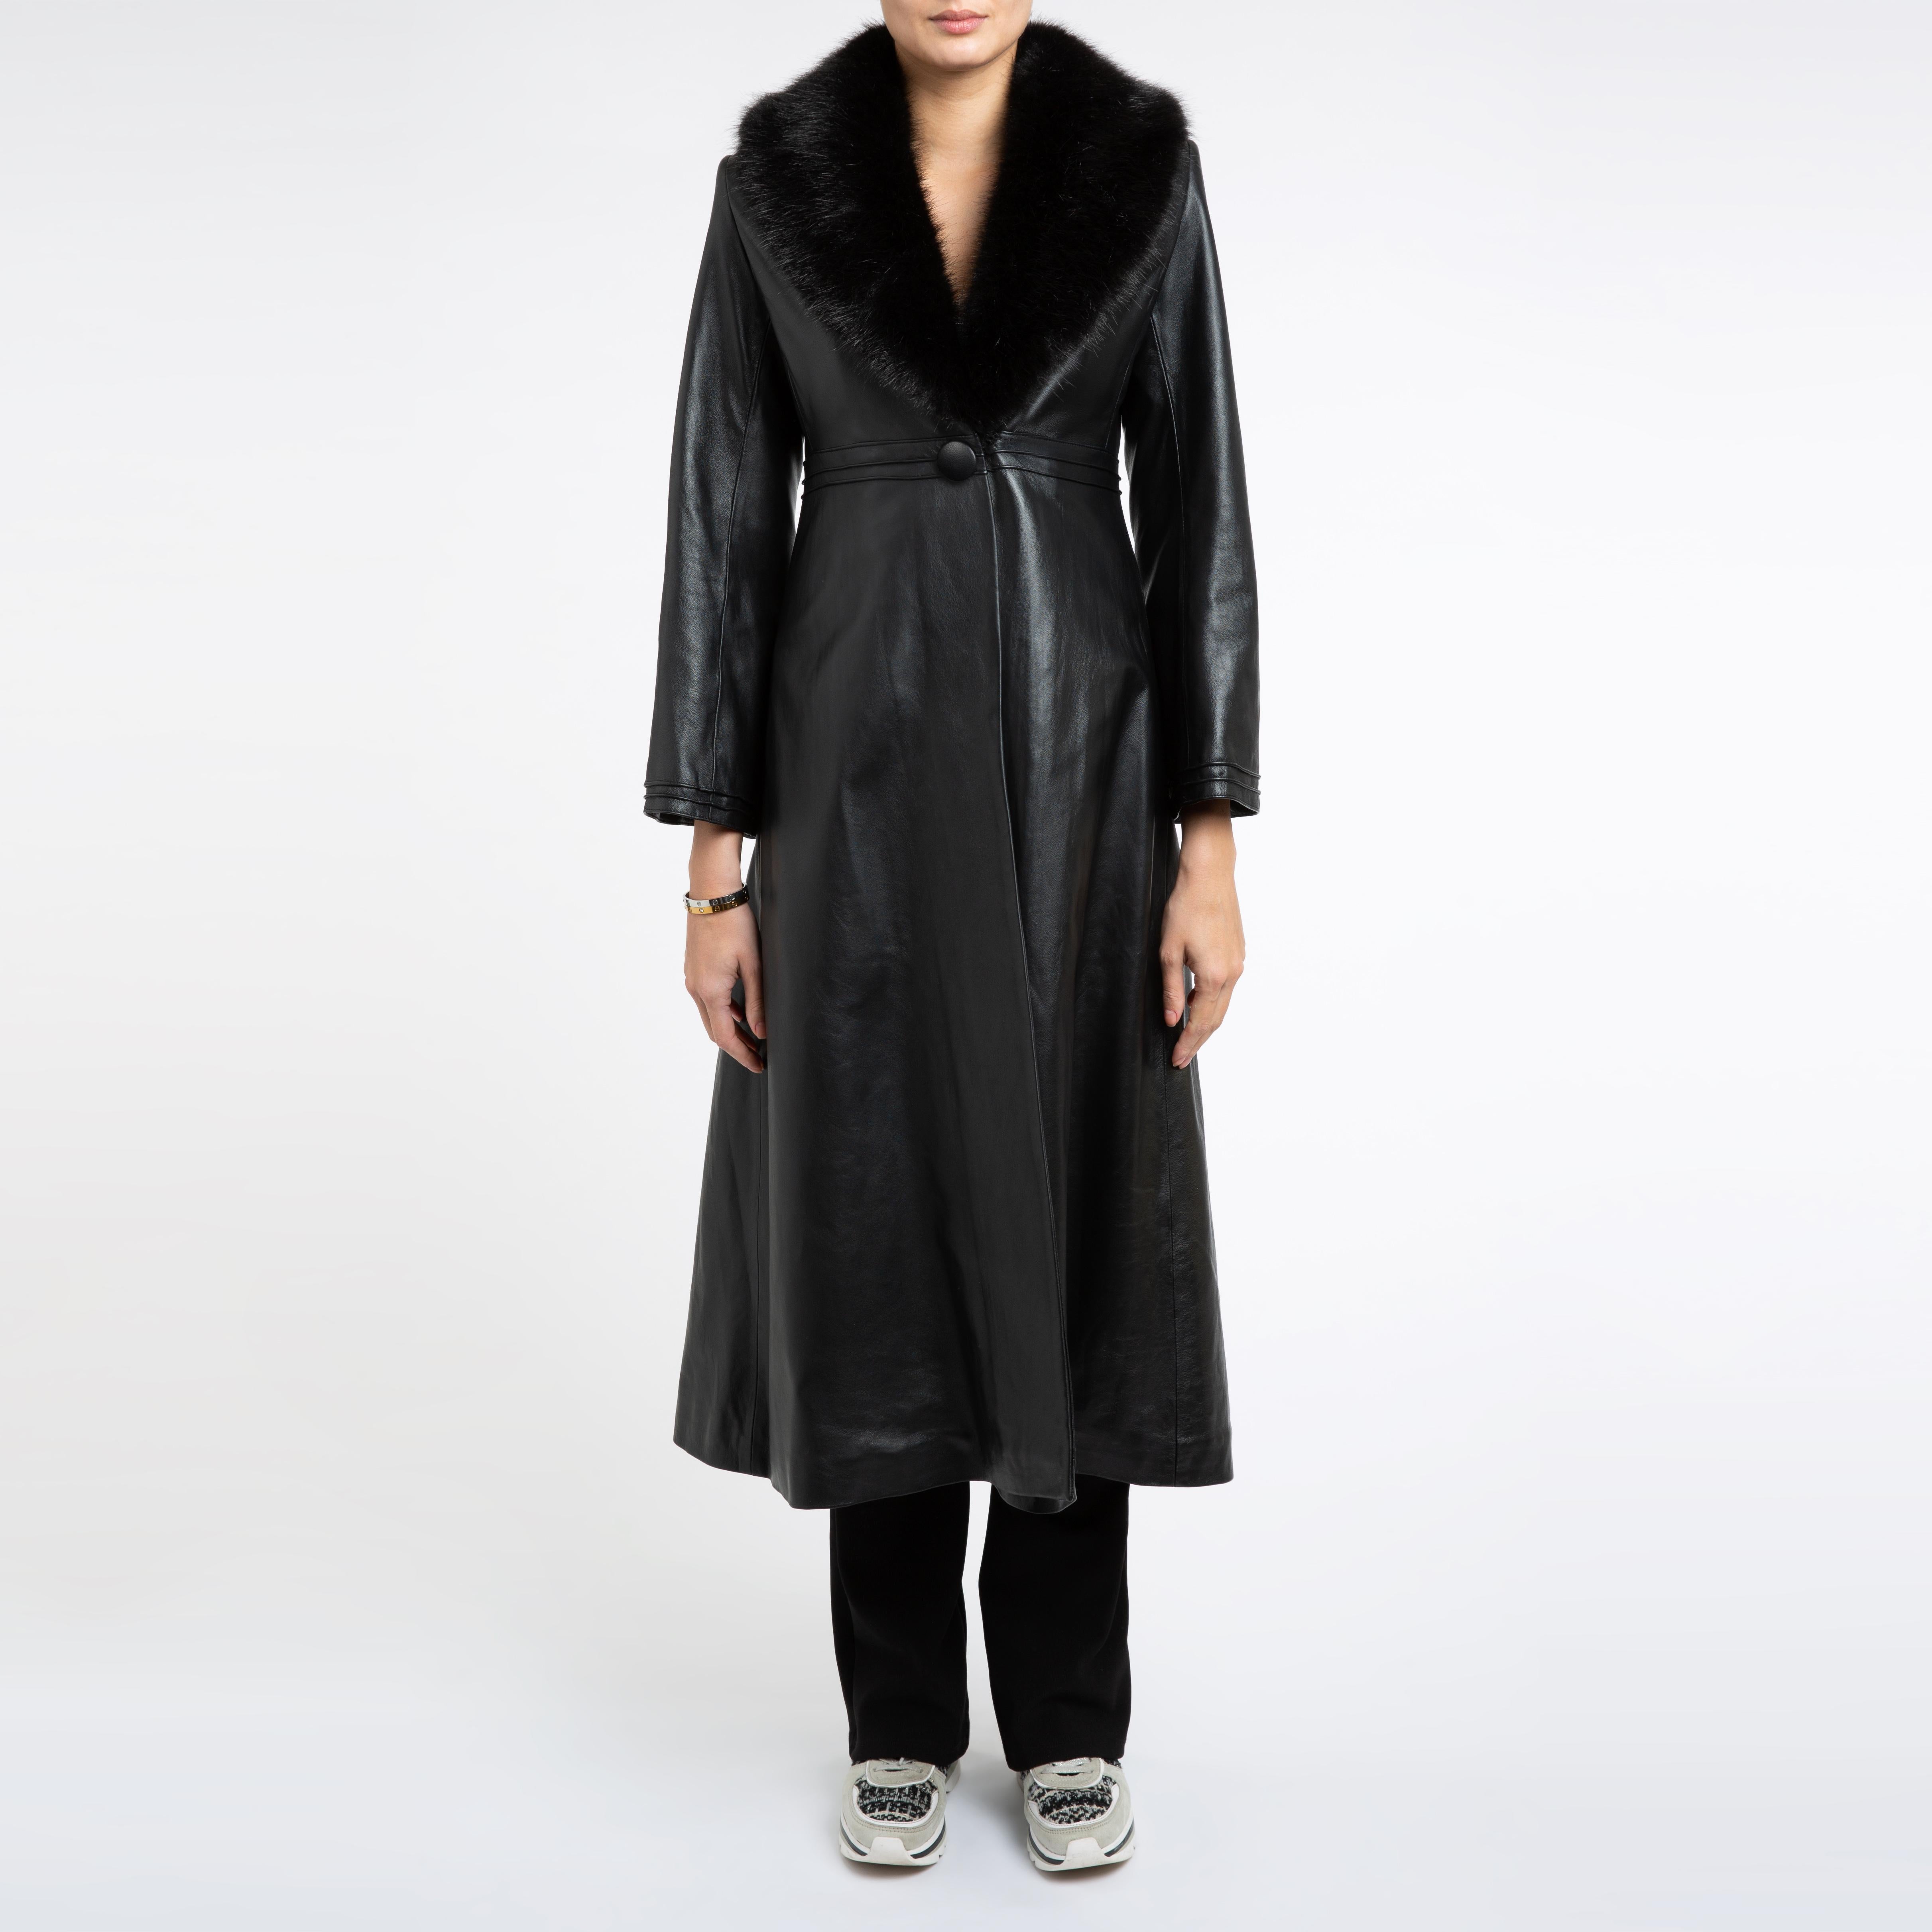 Verheyen London Edward Leather Coat with Faux Fur Collar in Black - Size uk 10 For Sale 15